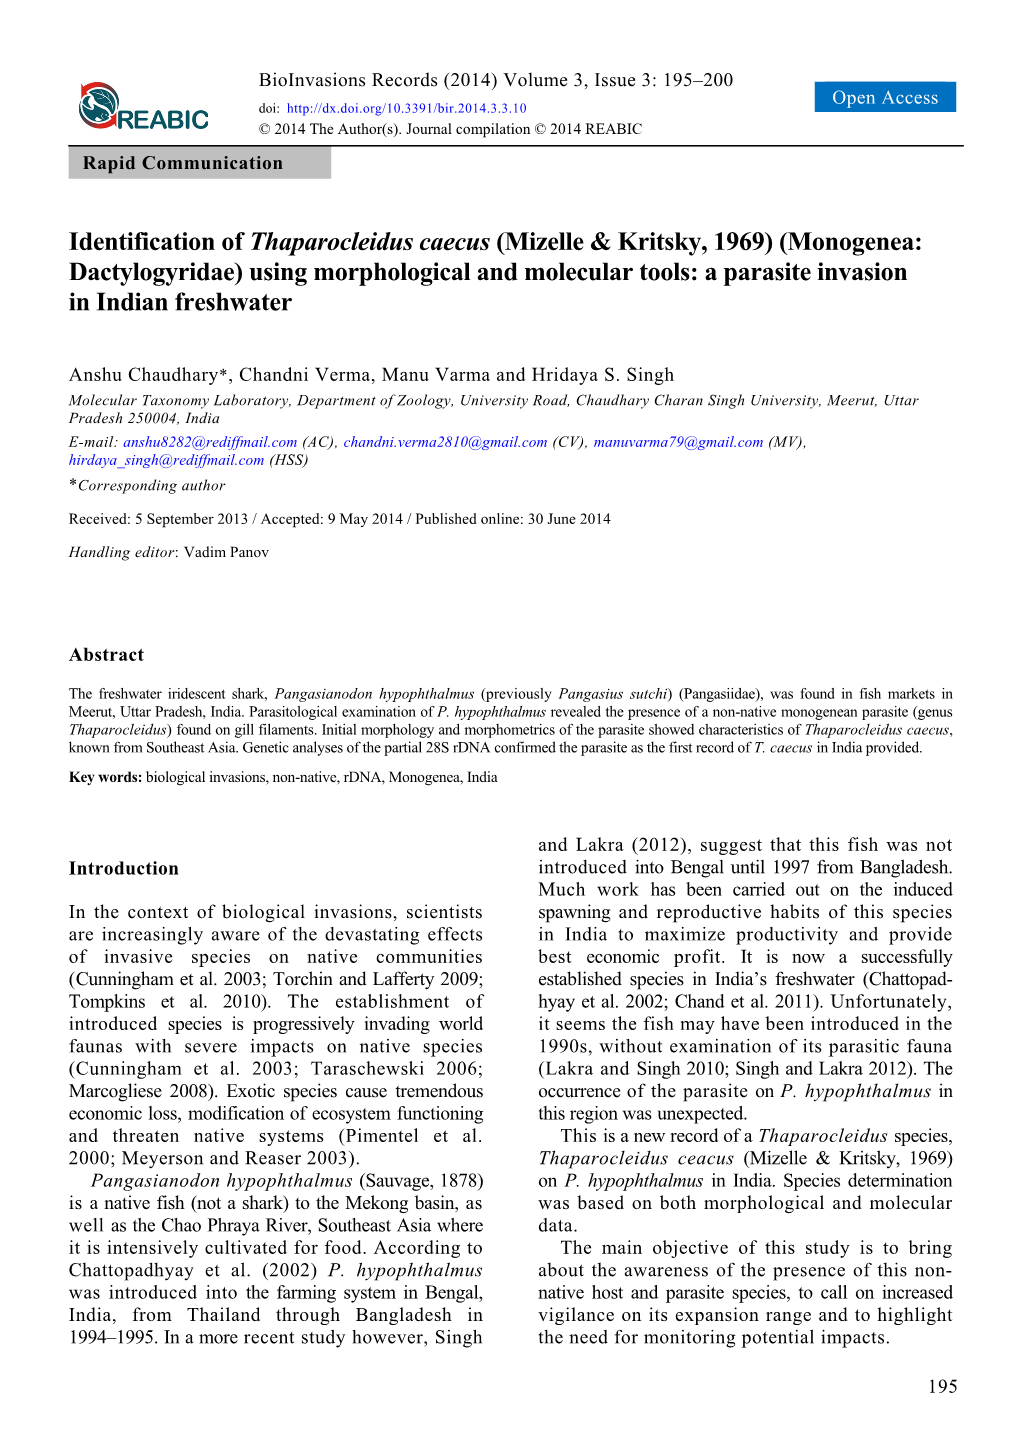 Monogenea: Dactylogyridae) Using Morphological and Molecular Tools: a Parasite Invasion in Indian Freshwater